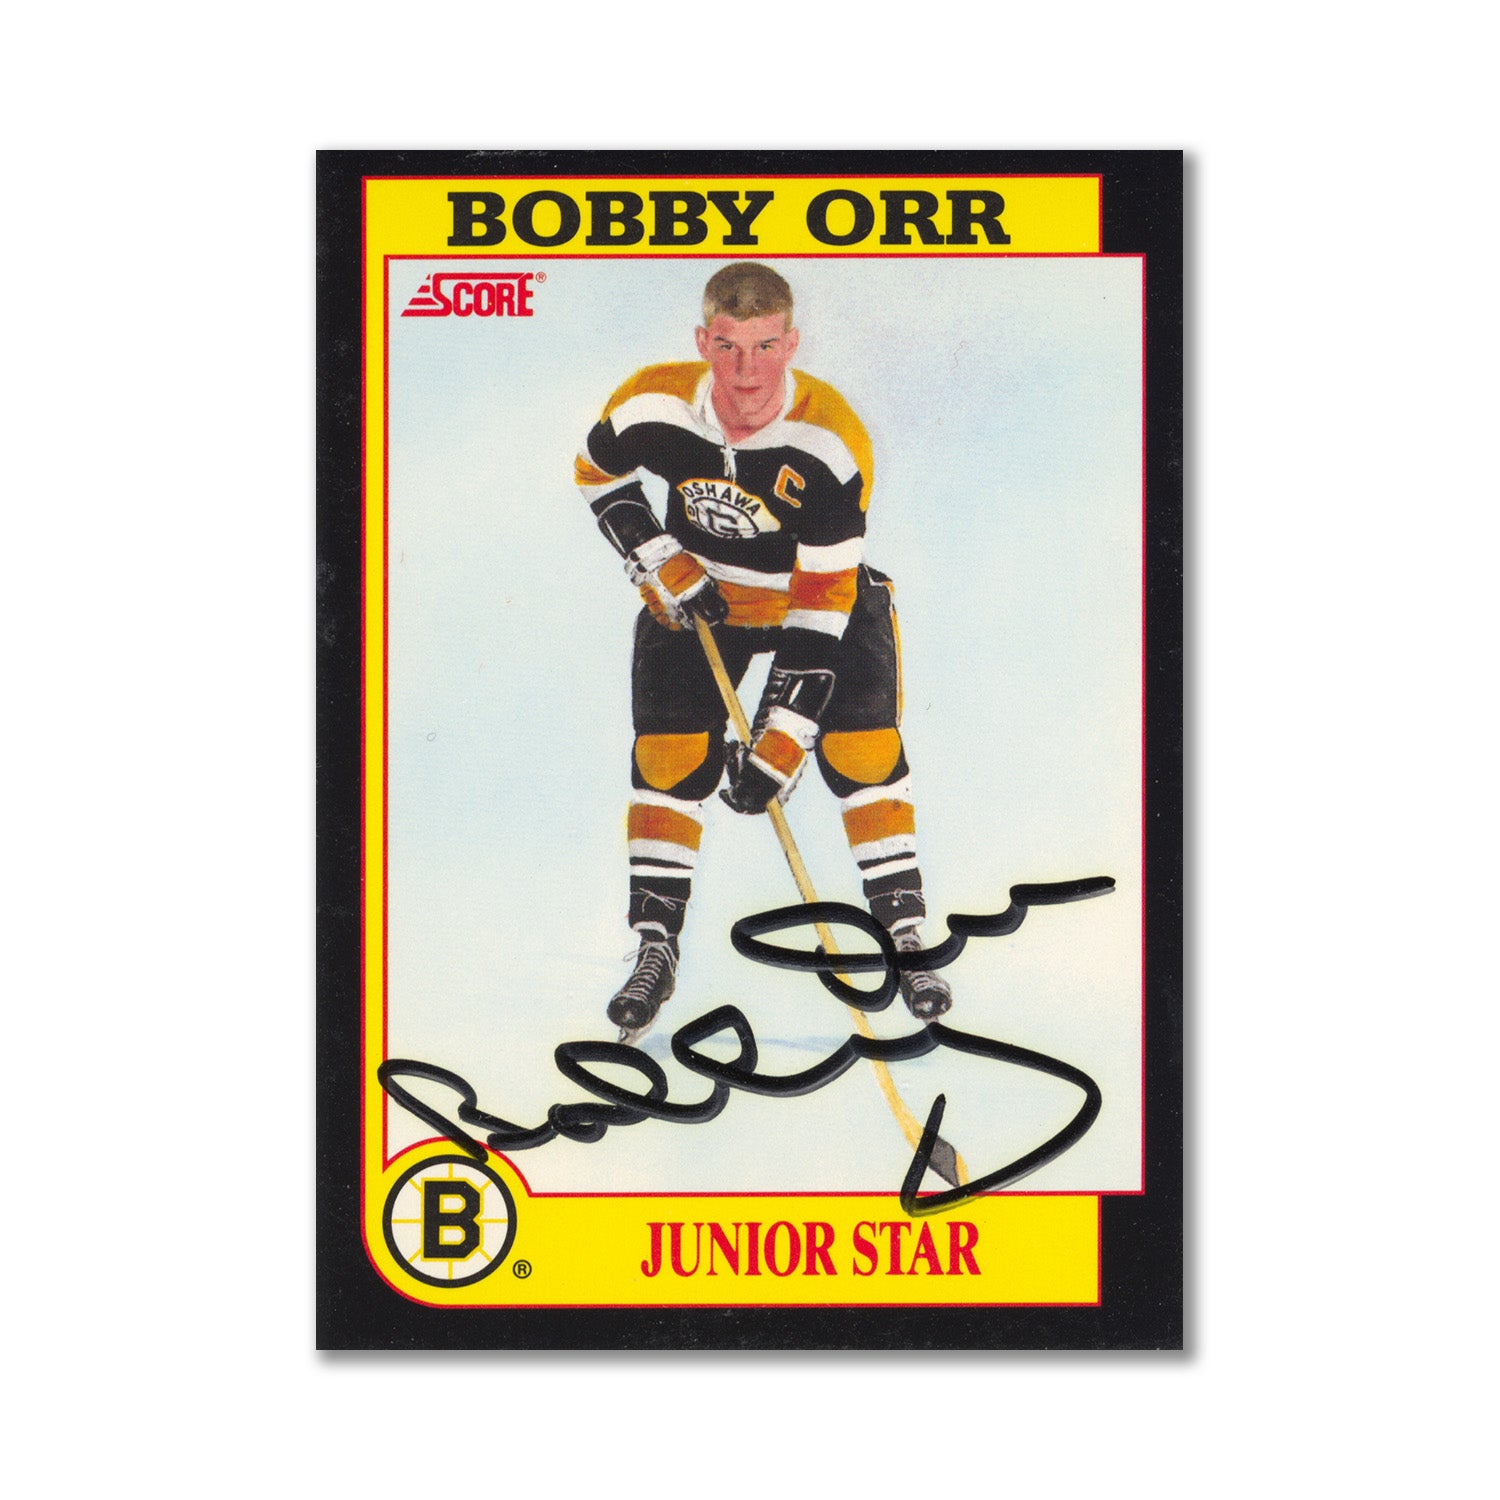 Autographed 1991-92 Score Bobby Orr Junior Star Insert Card